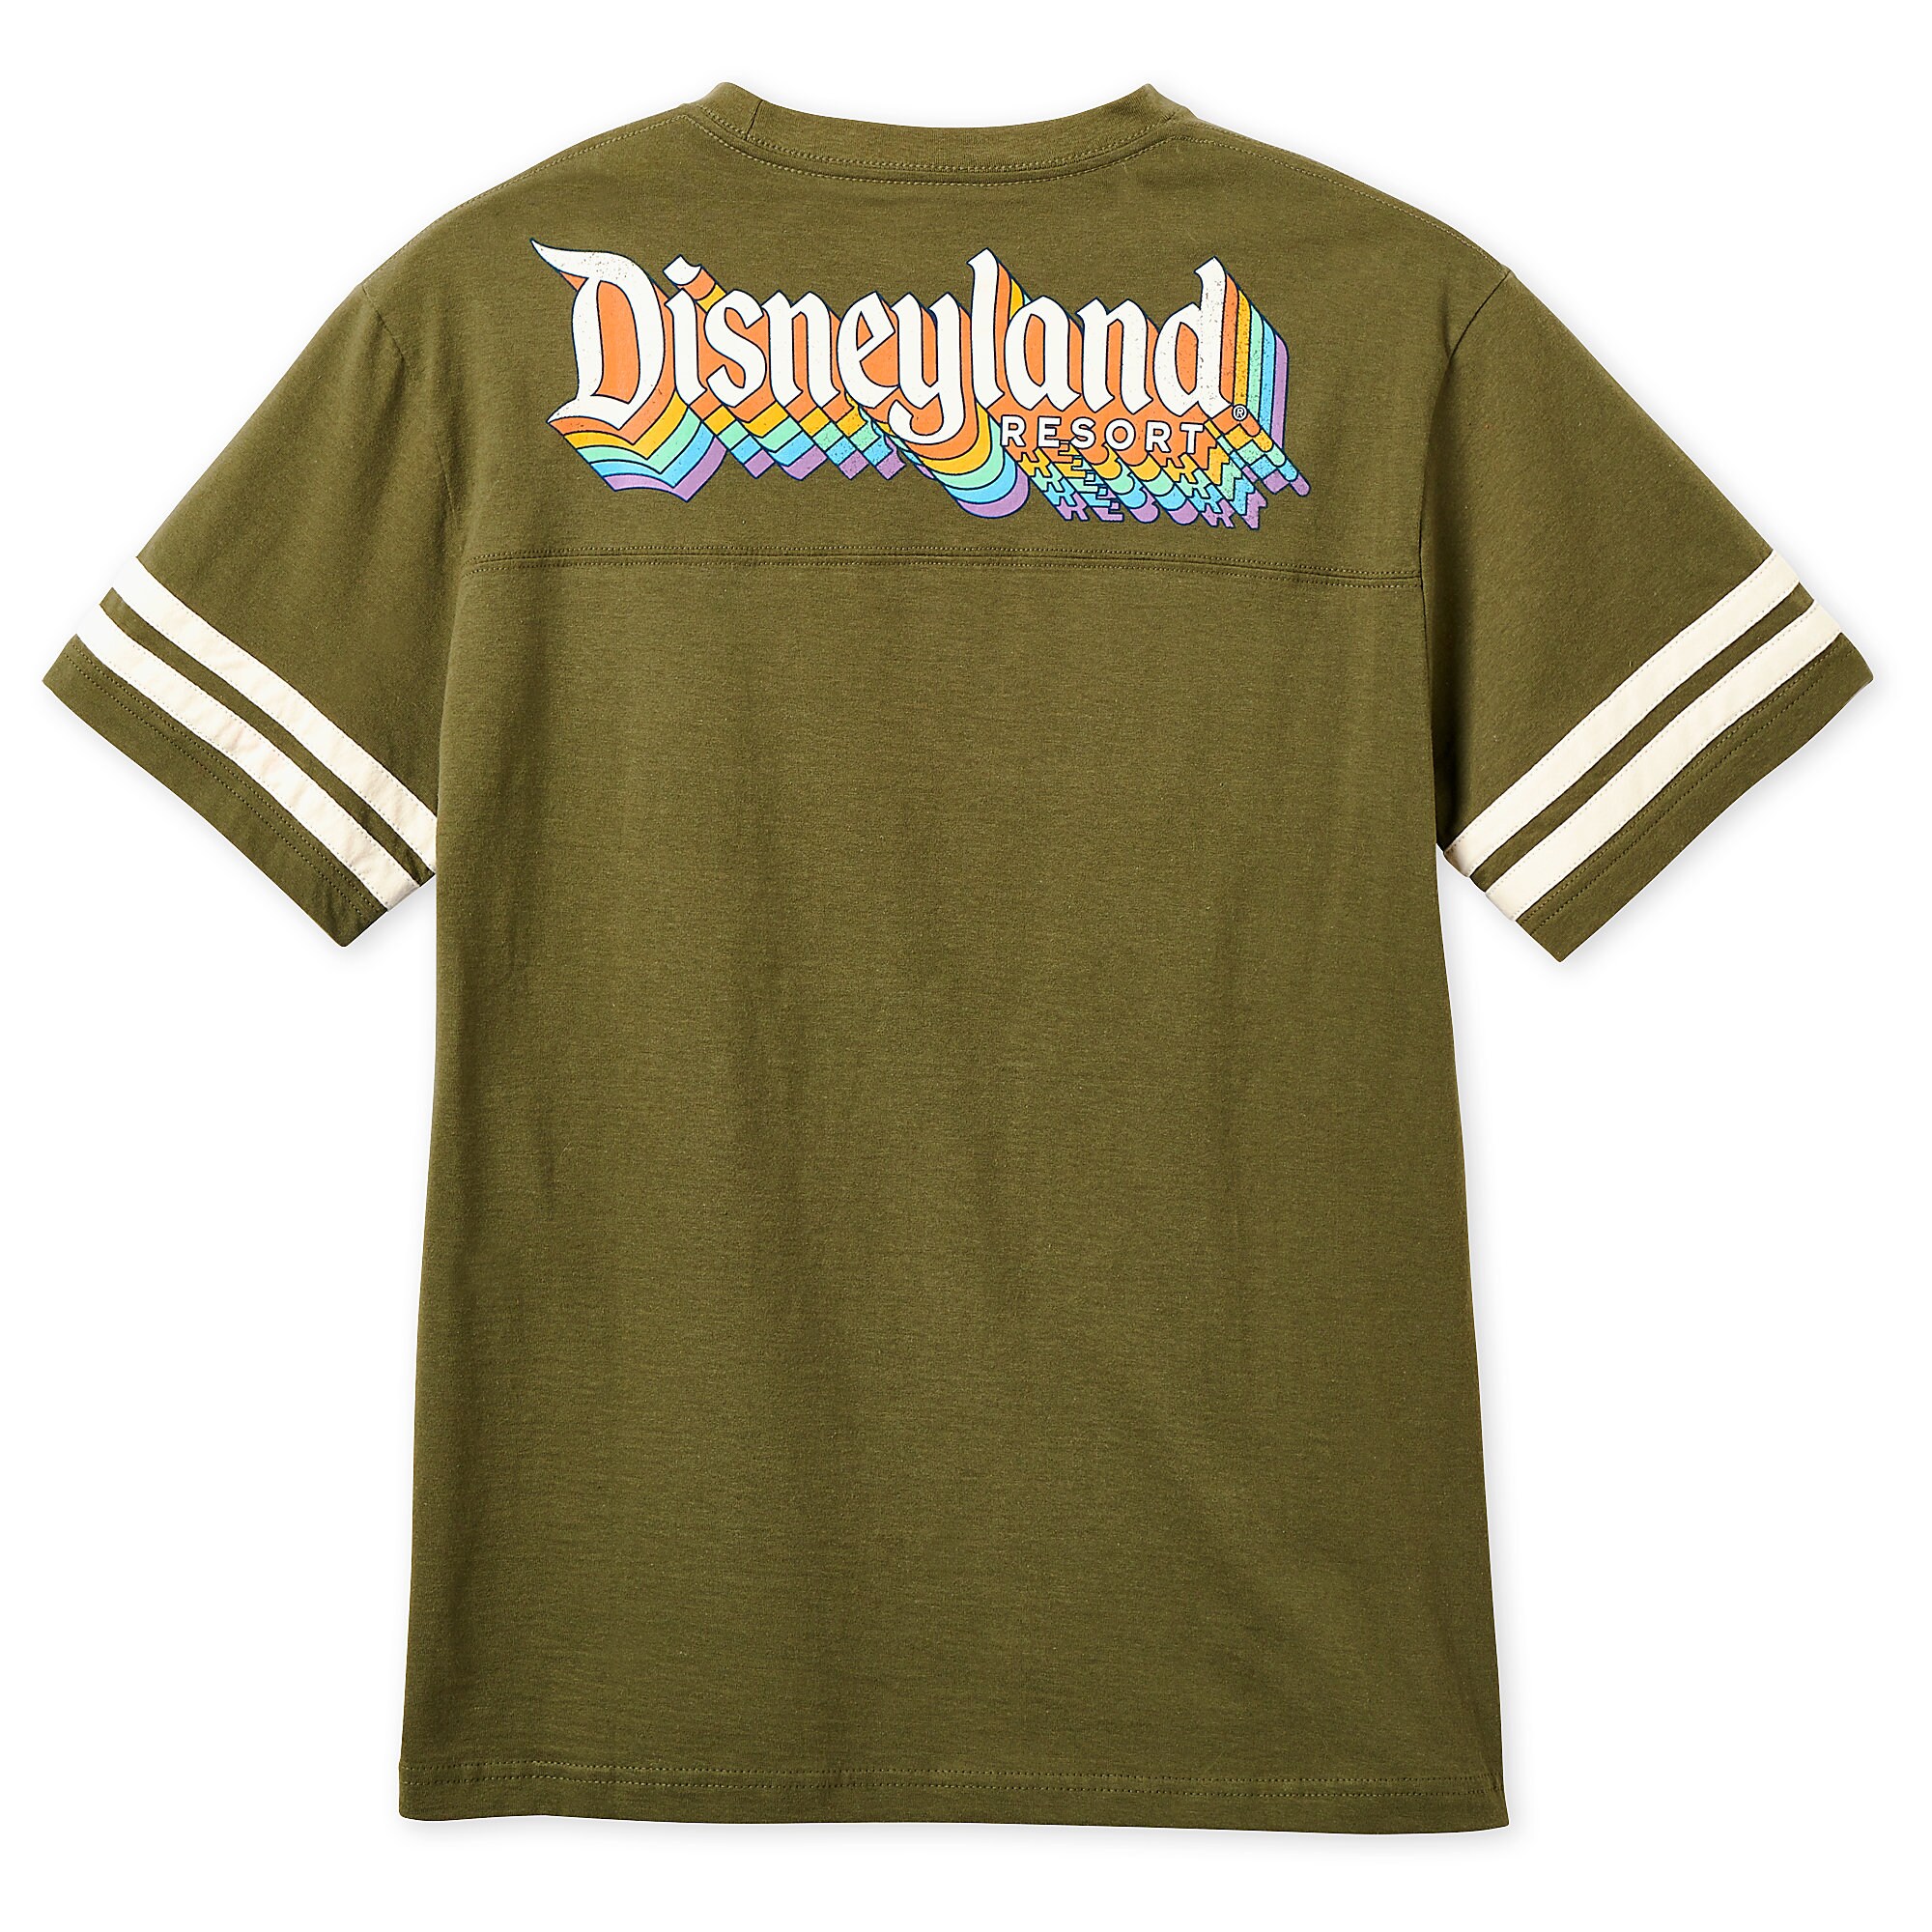 Disneyland Football T-Shirt for Adults